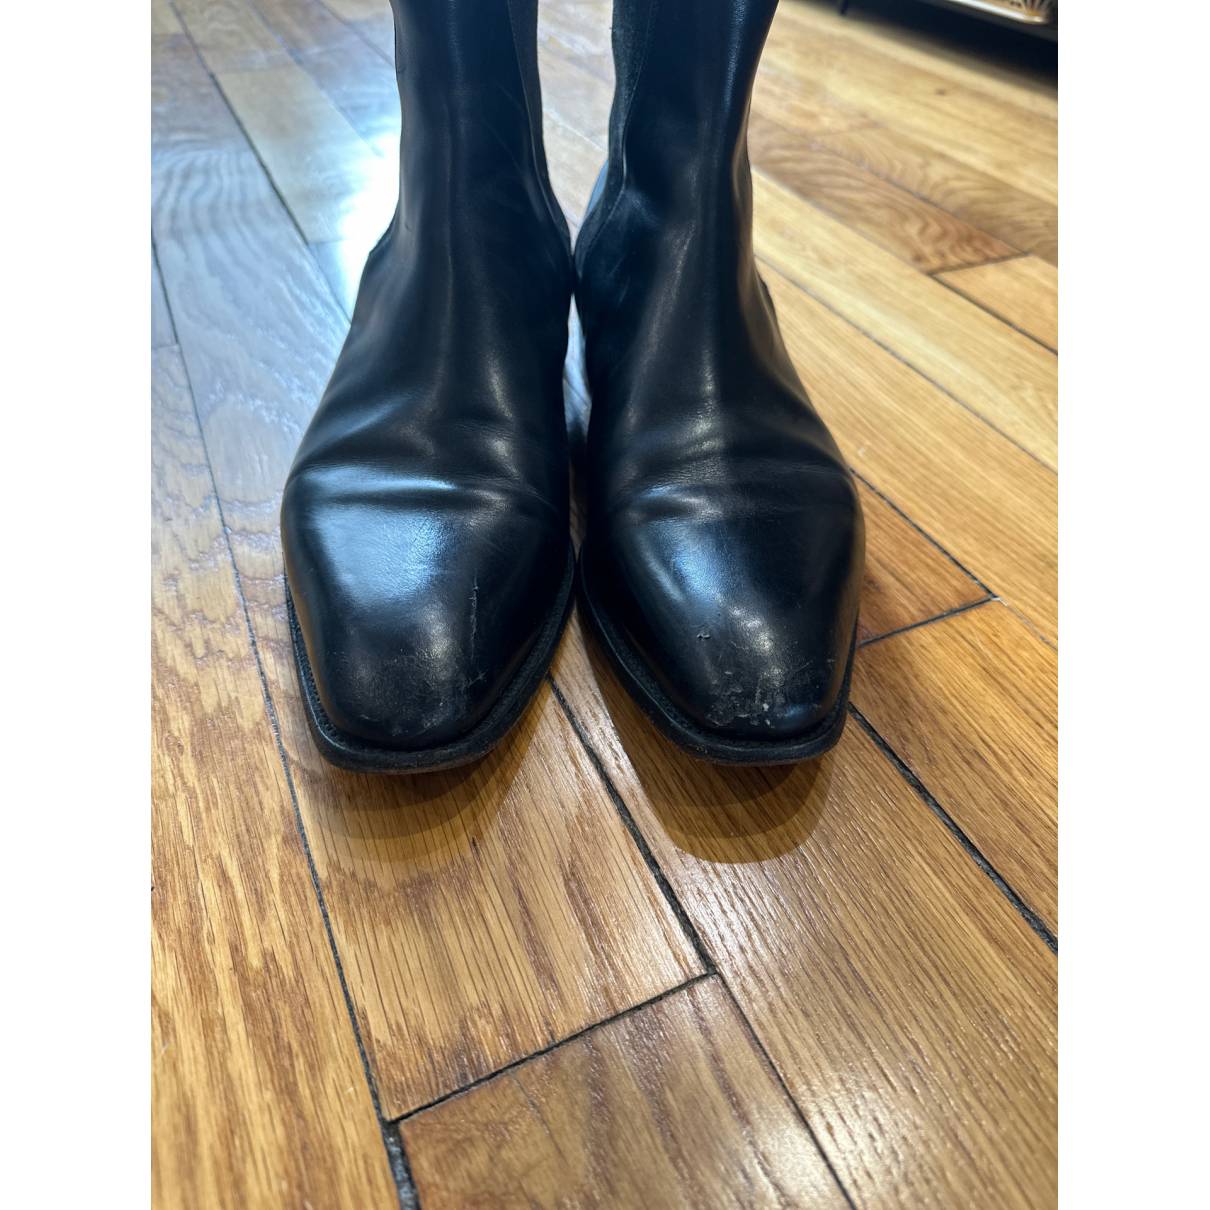 Buy JM Weston Leather boots online